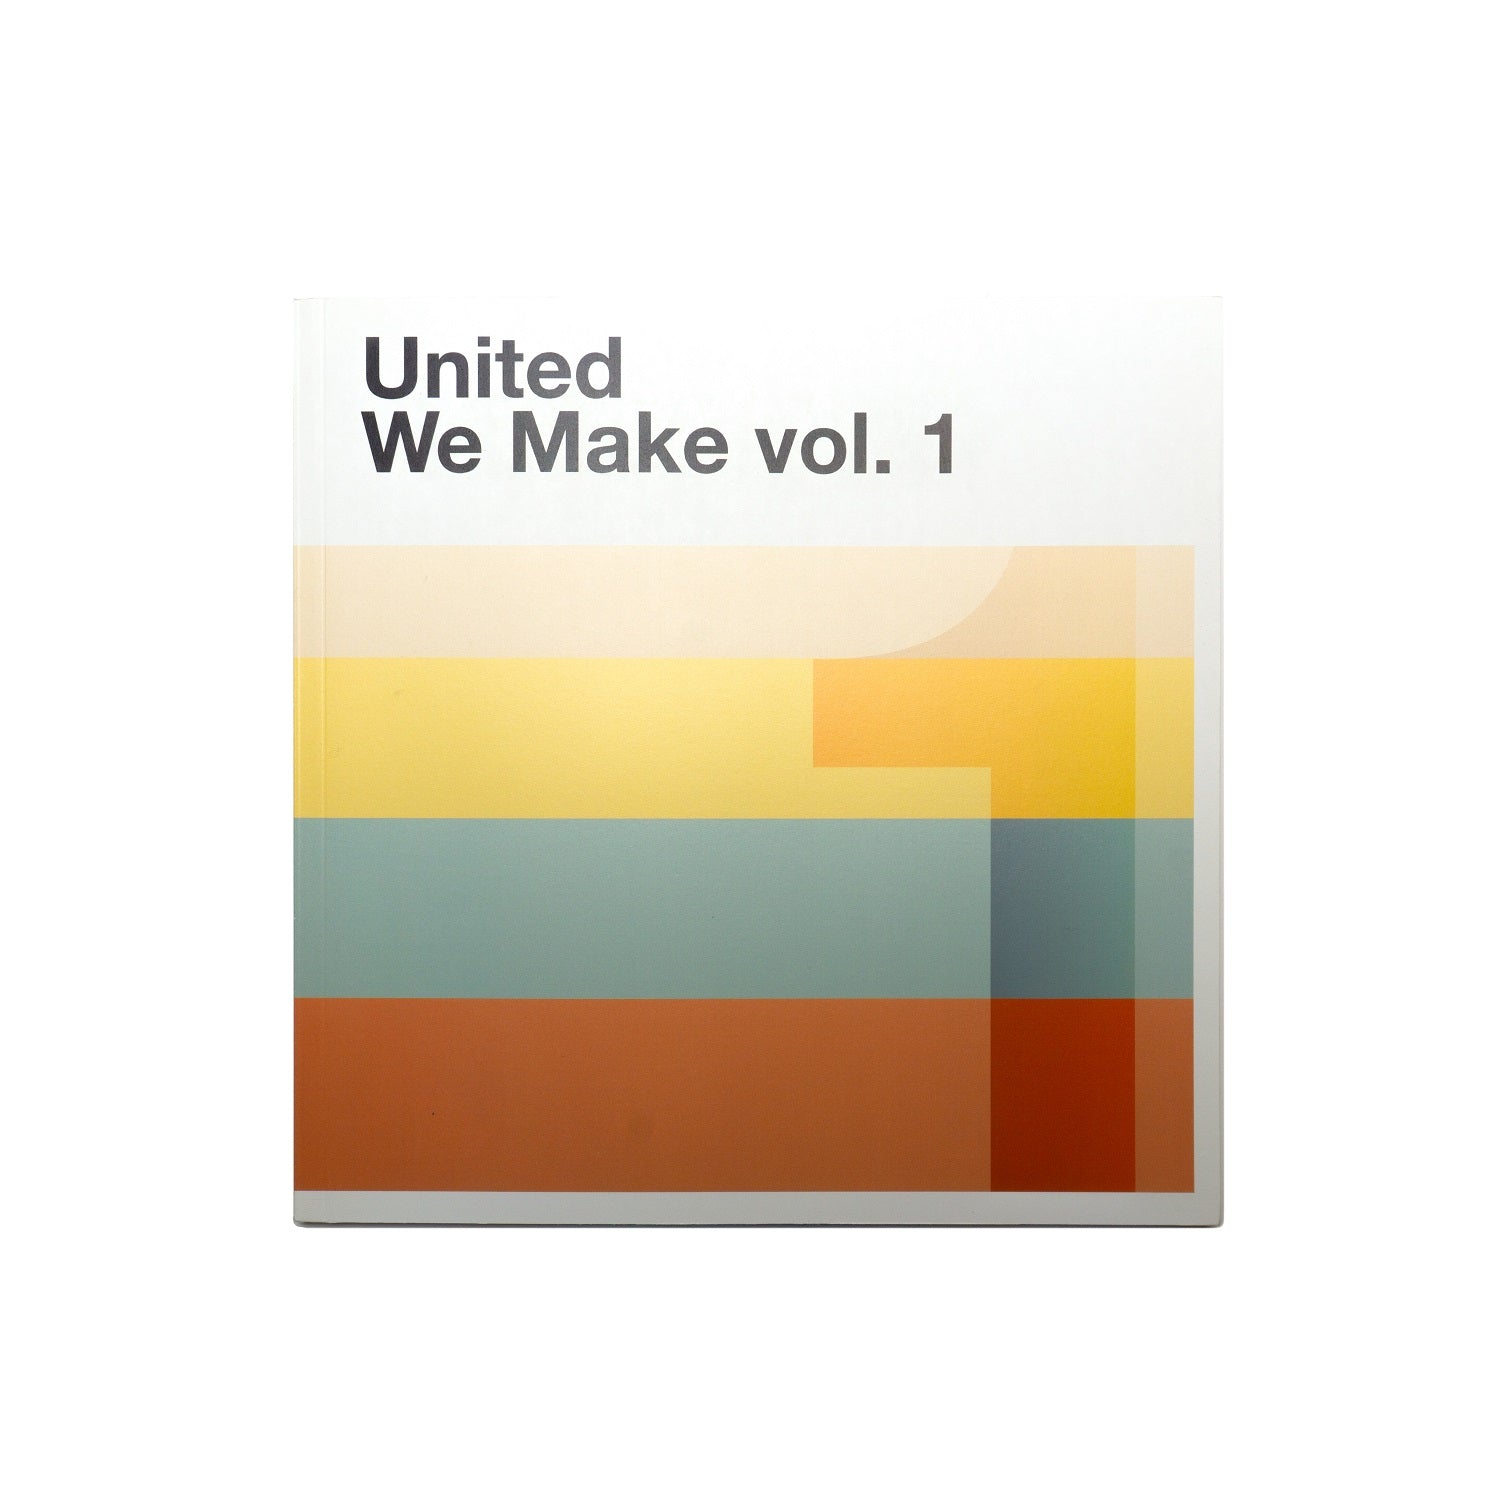 United We Make vol. 1 - Saint Anthony Industries